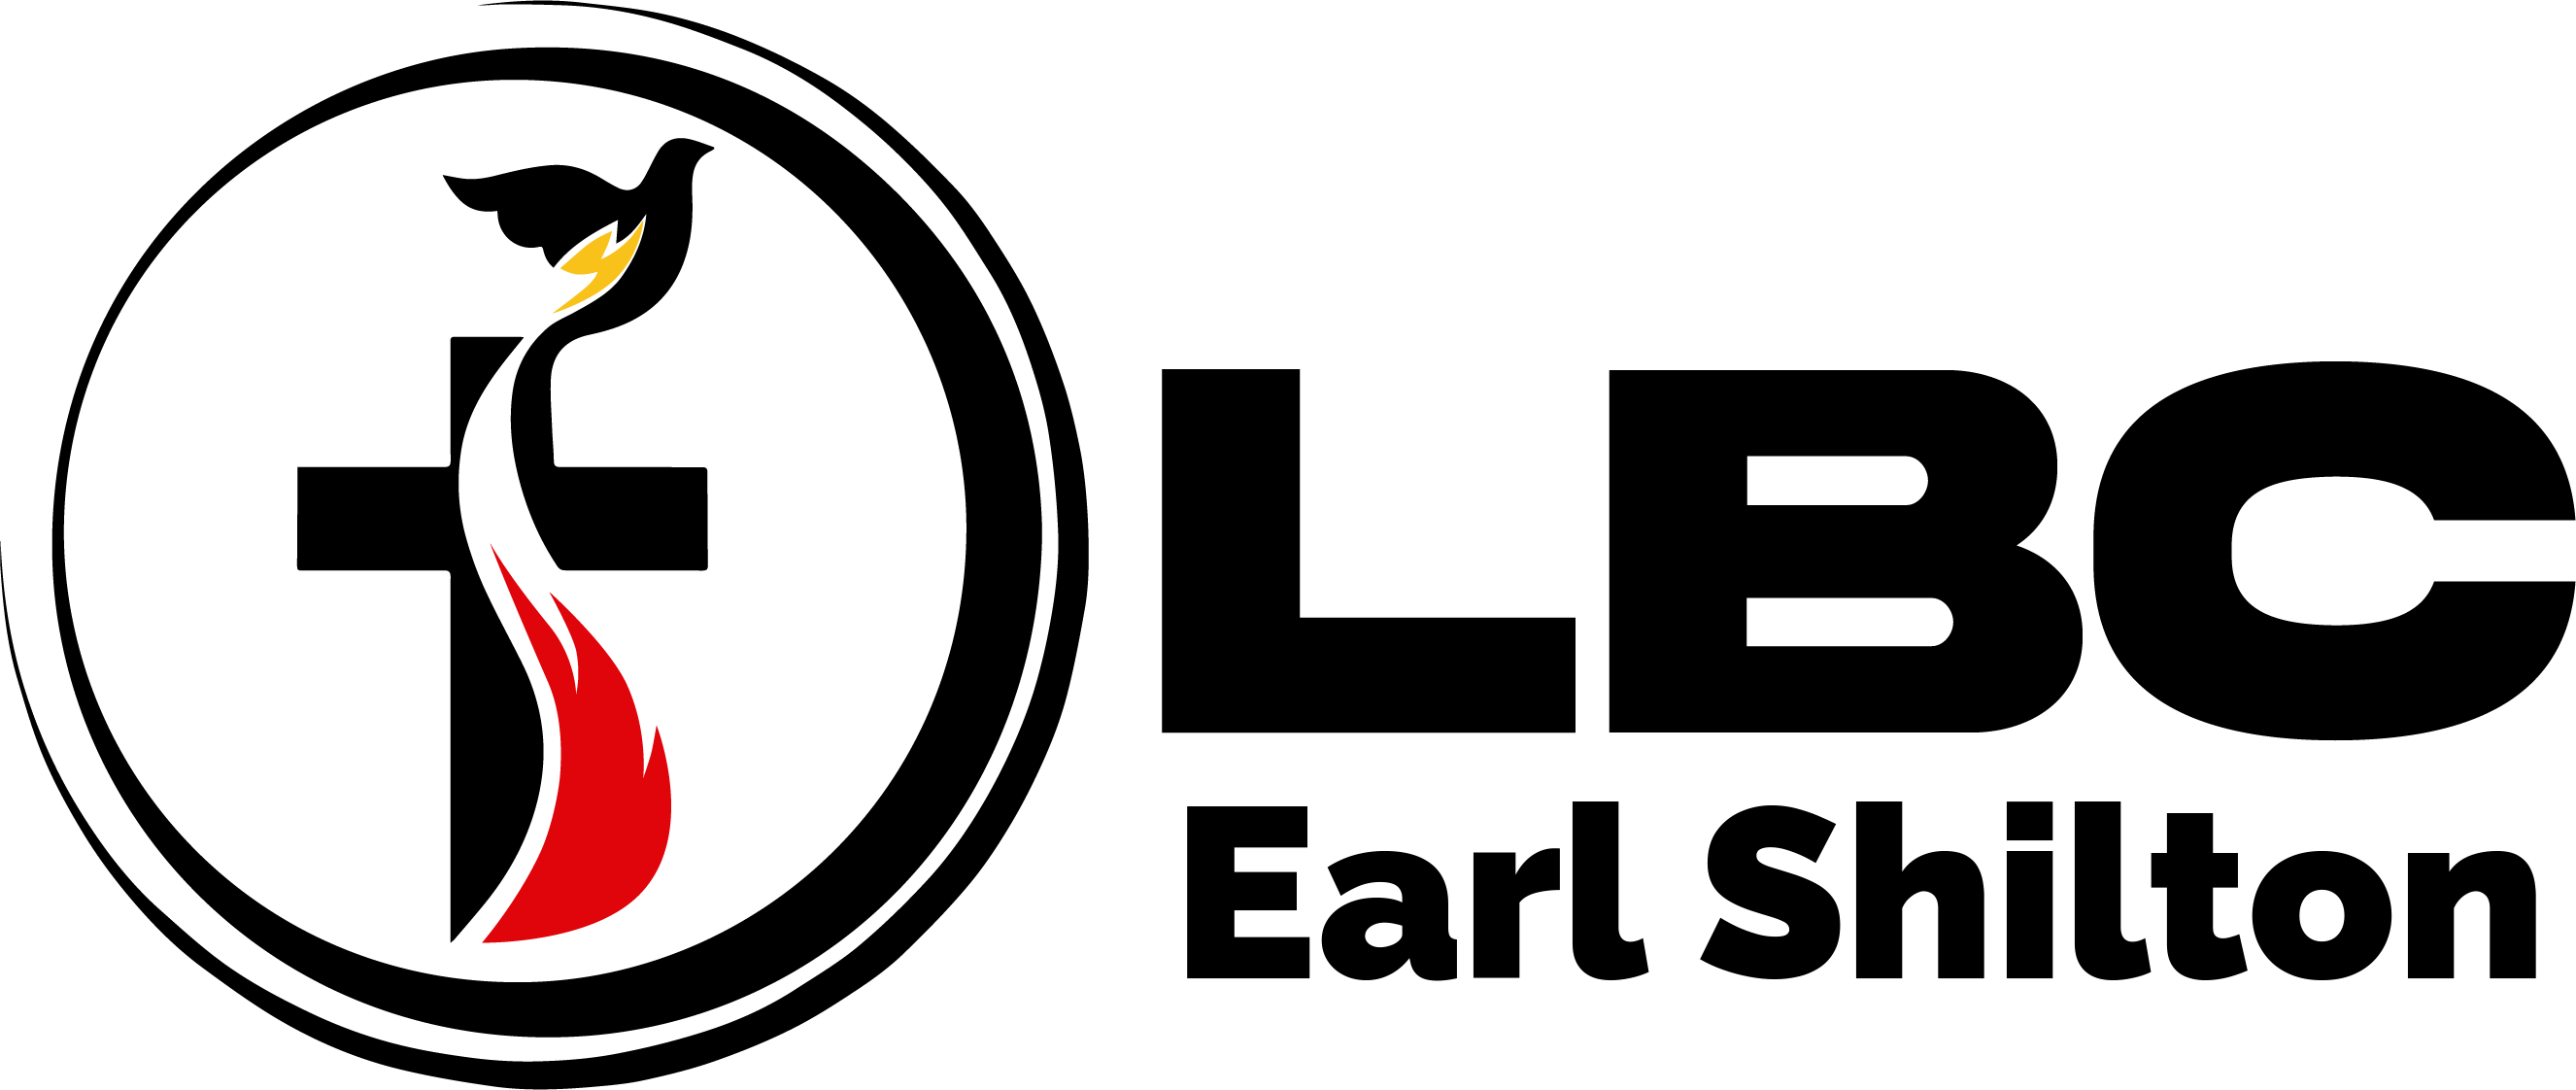 LBC Earl Shilton logo